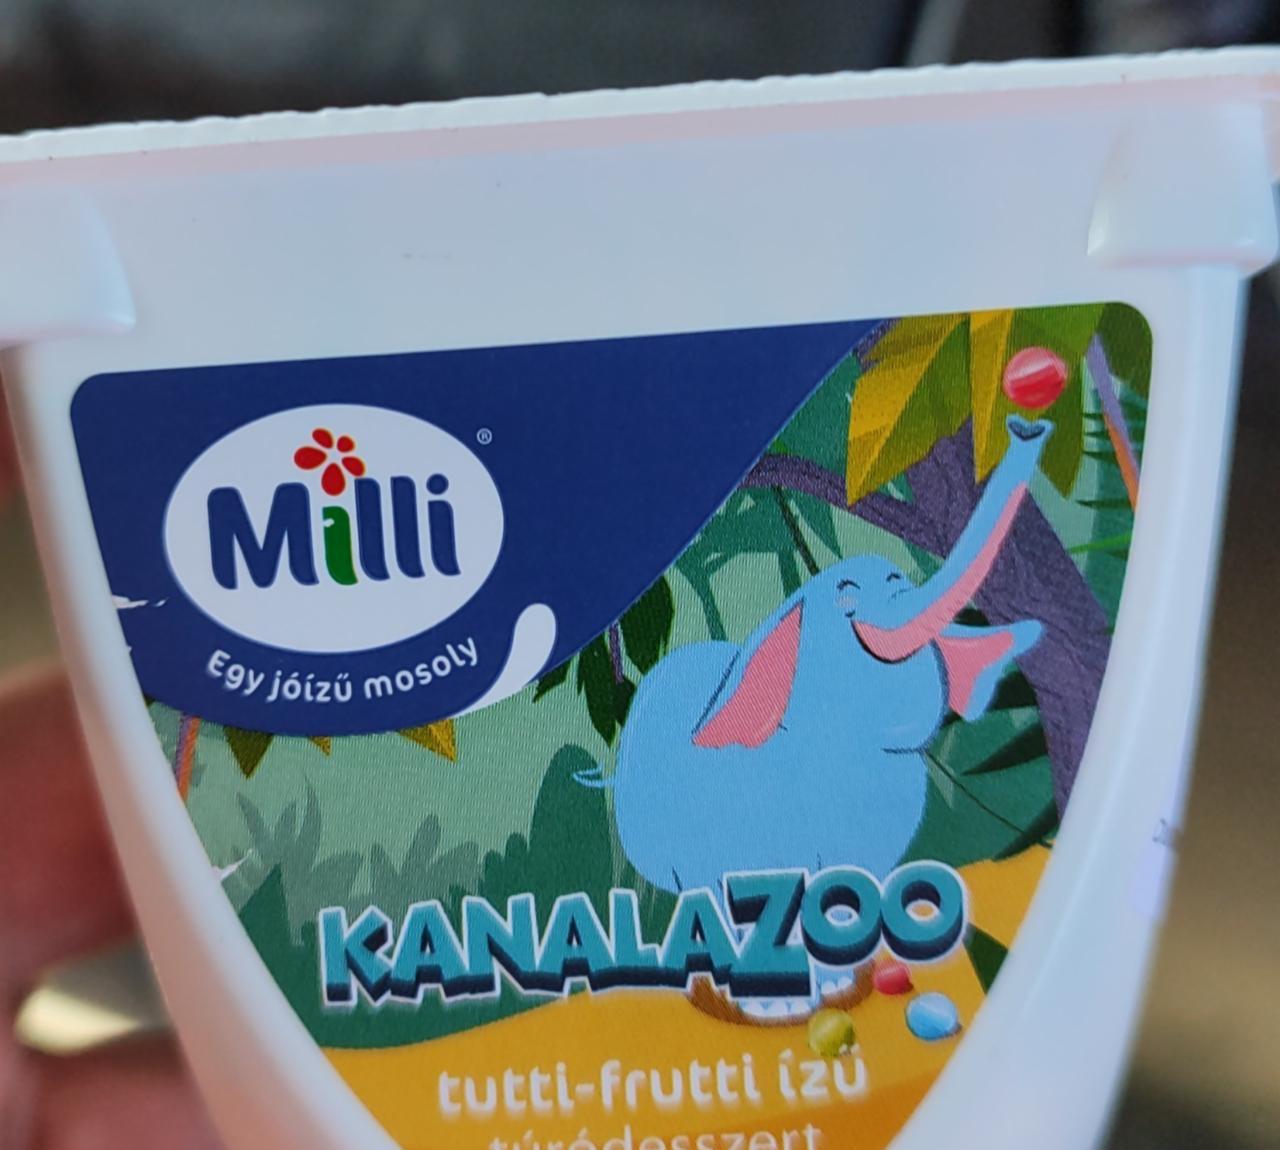 Képek - Kanalazoo tutti-frutti ízű Milli